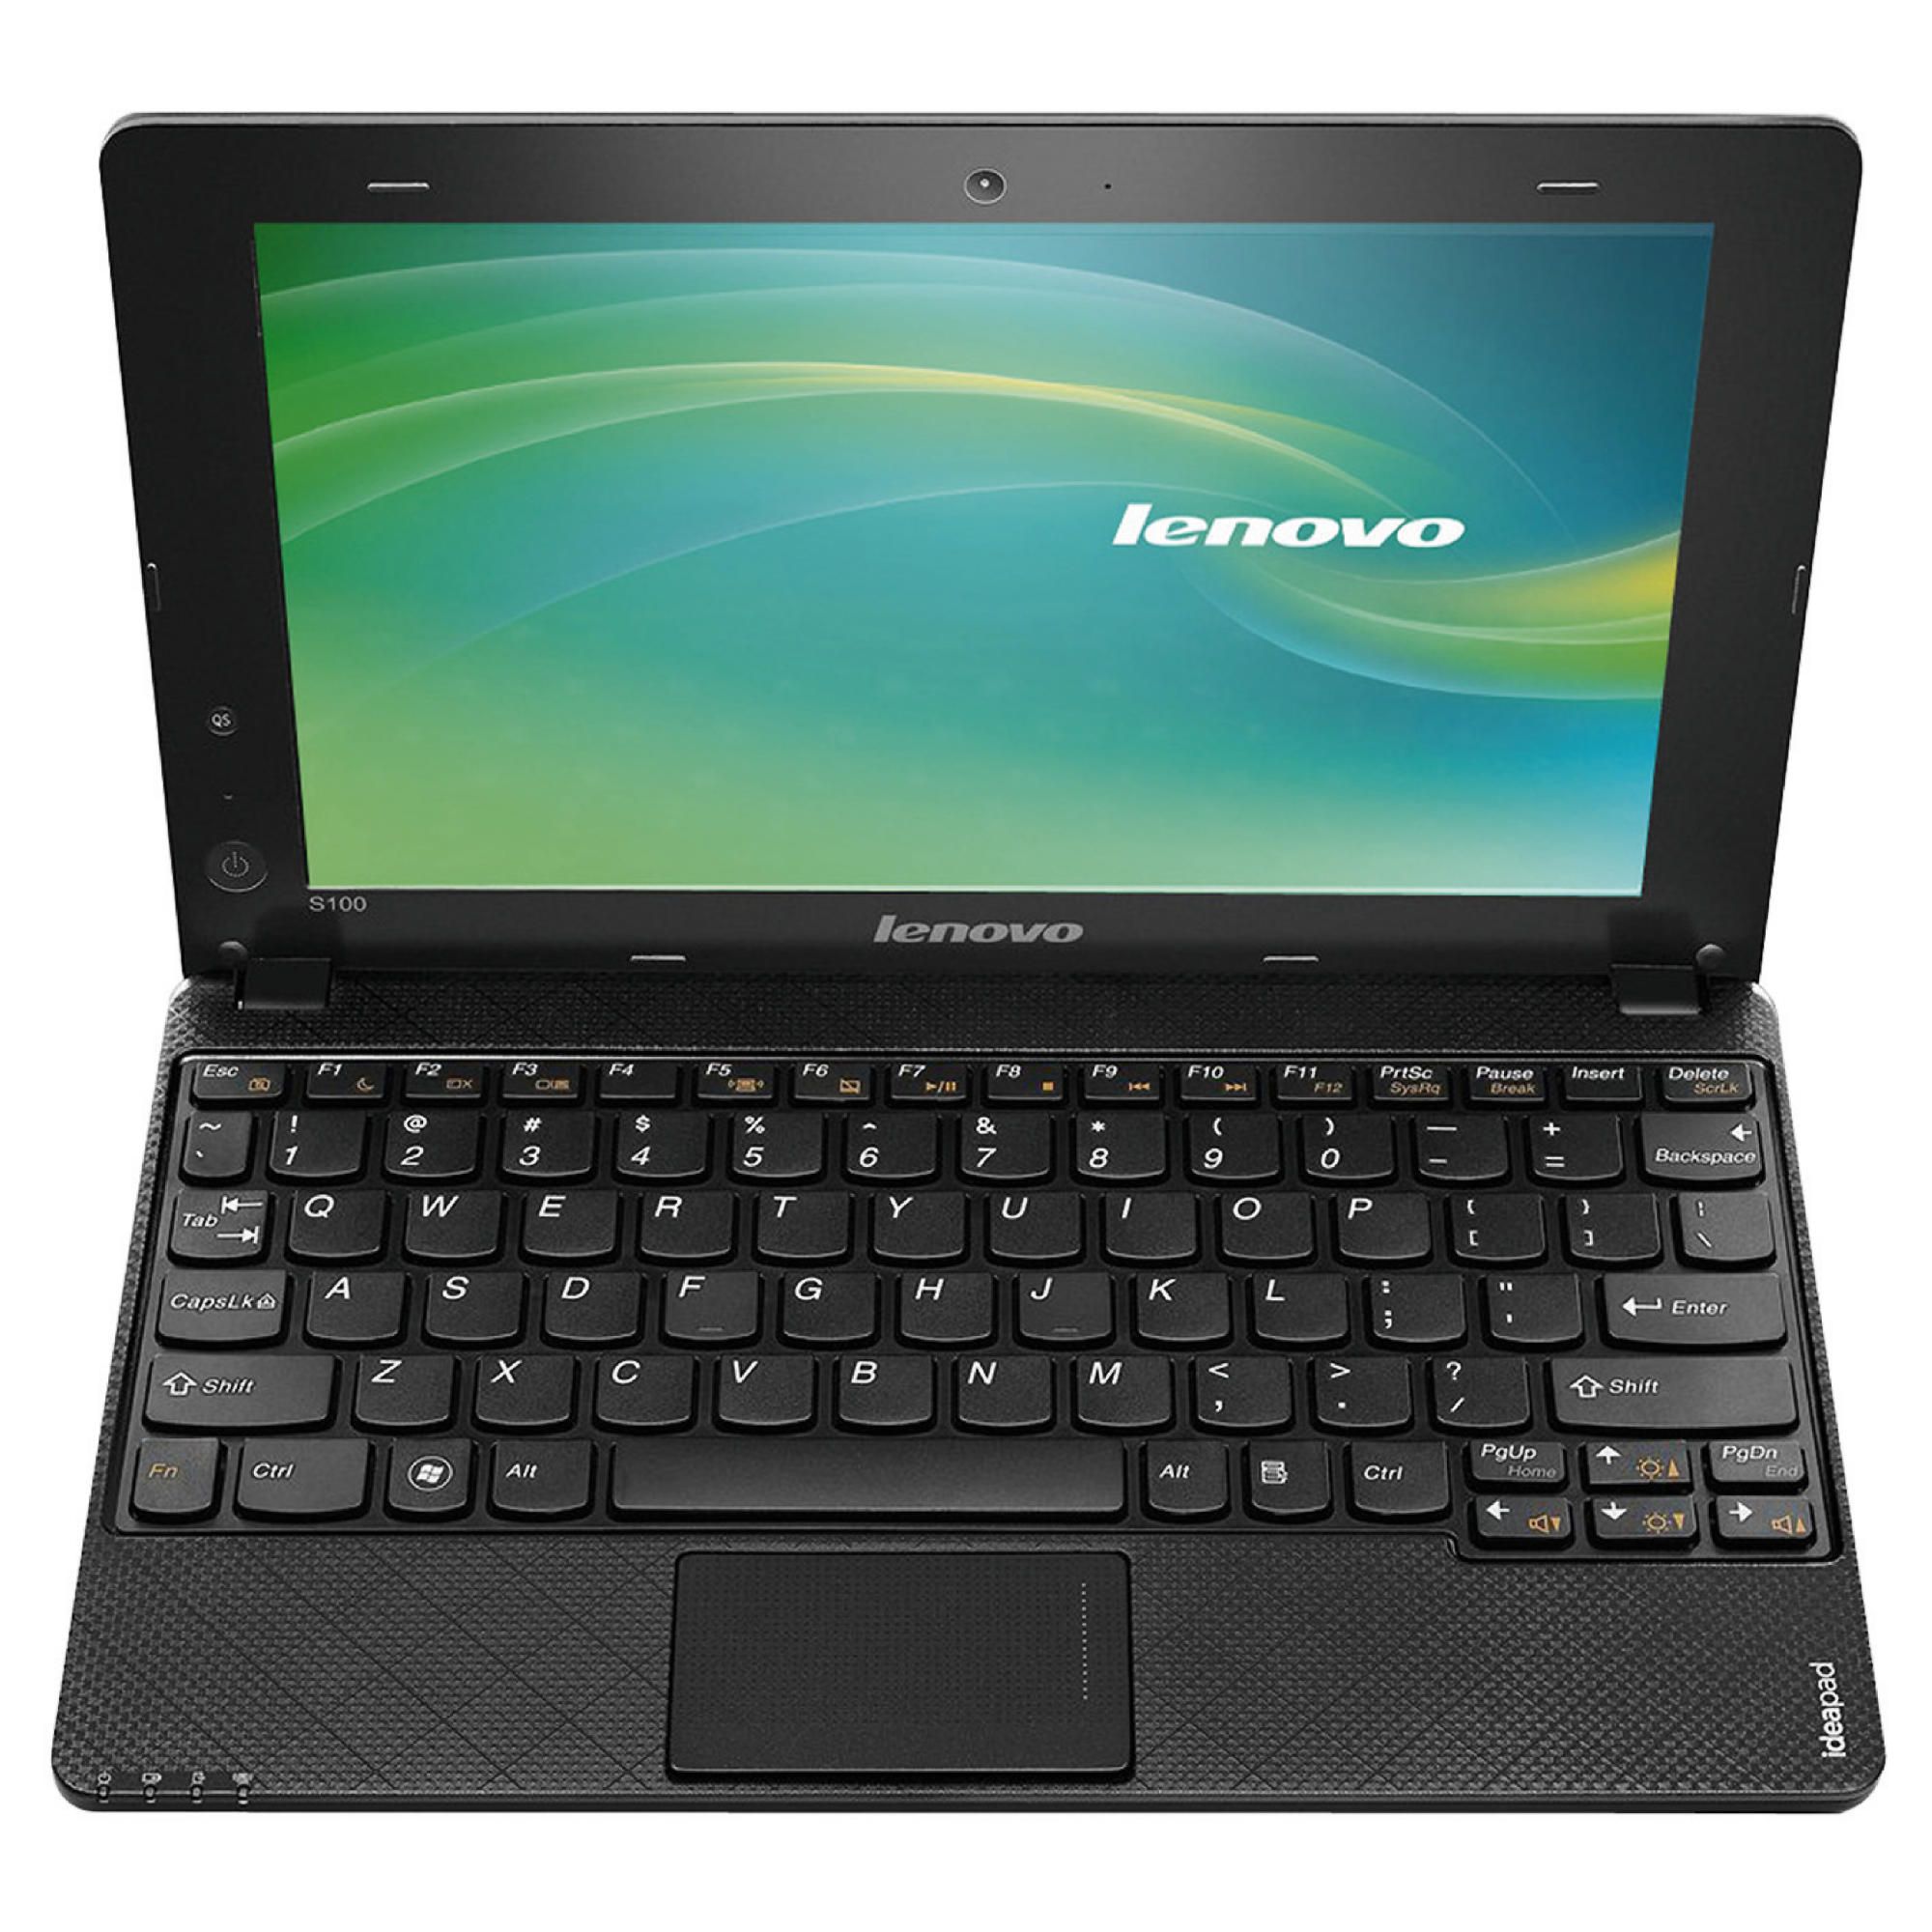 Lenovo S100 Netbook (Intel Atom, 1GB, 250GB, 10.1'' Display) Black at Tesco Direct